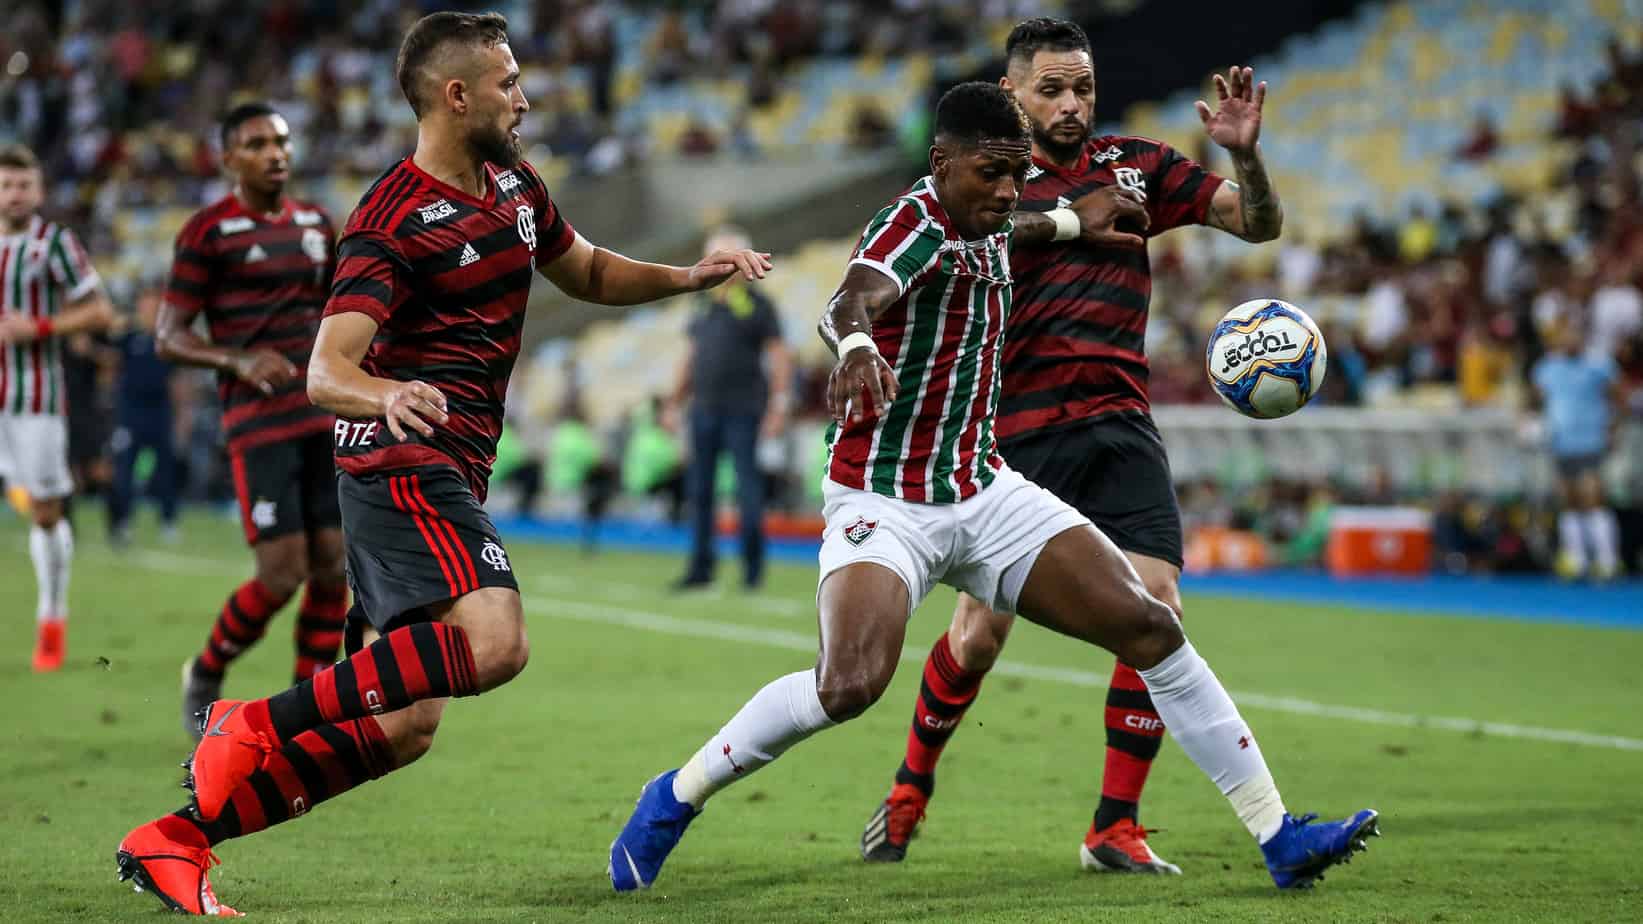 The Clássico das Multidões Returns: Flamengo vs. Fluminense – Betting Odds and Preview